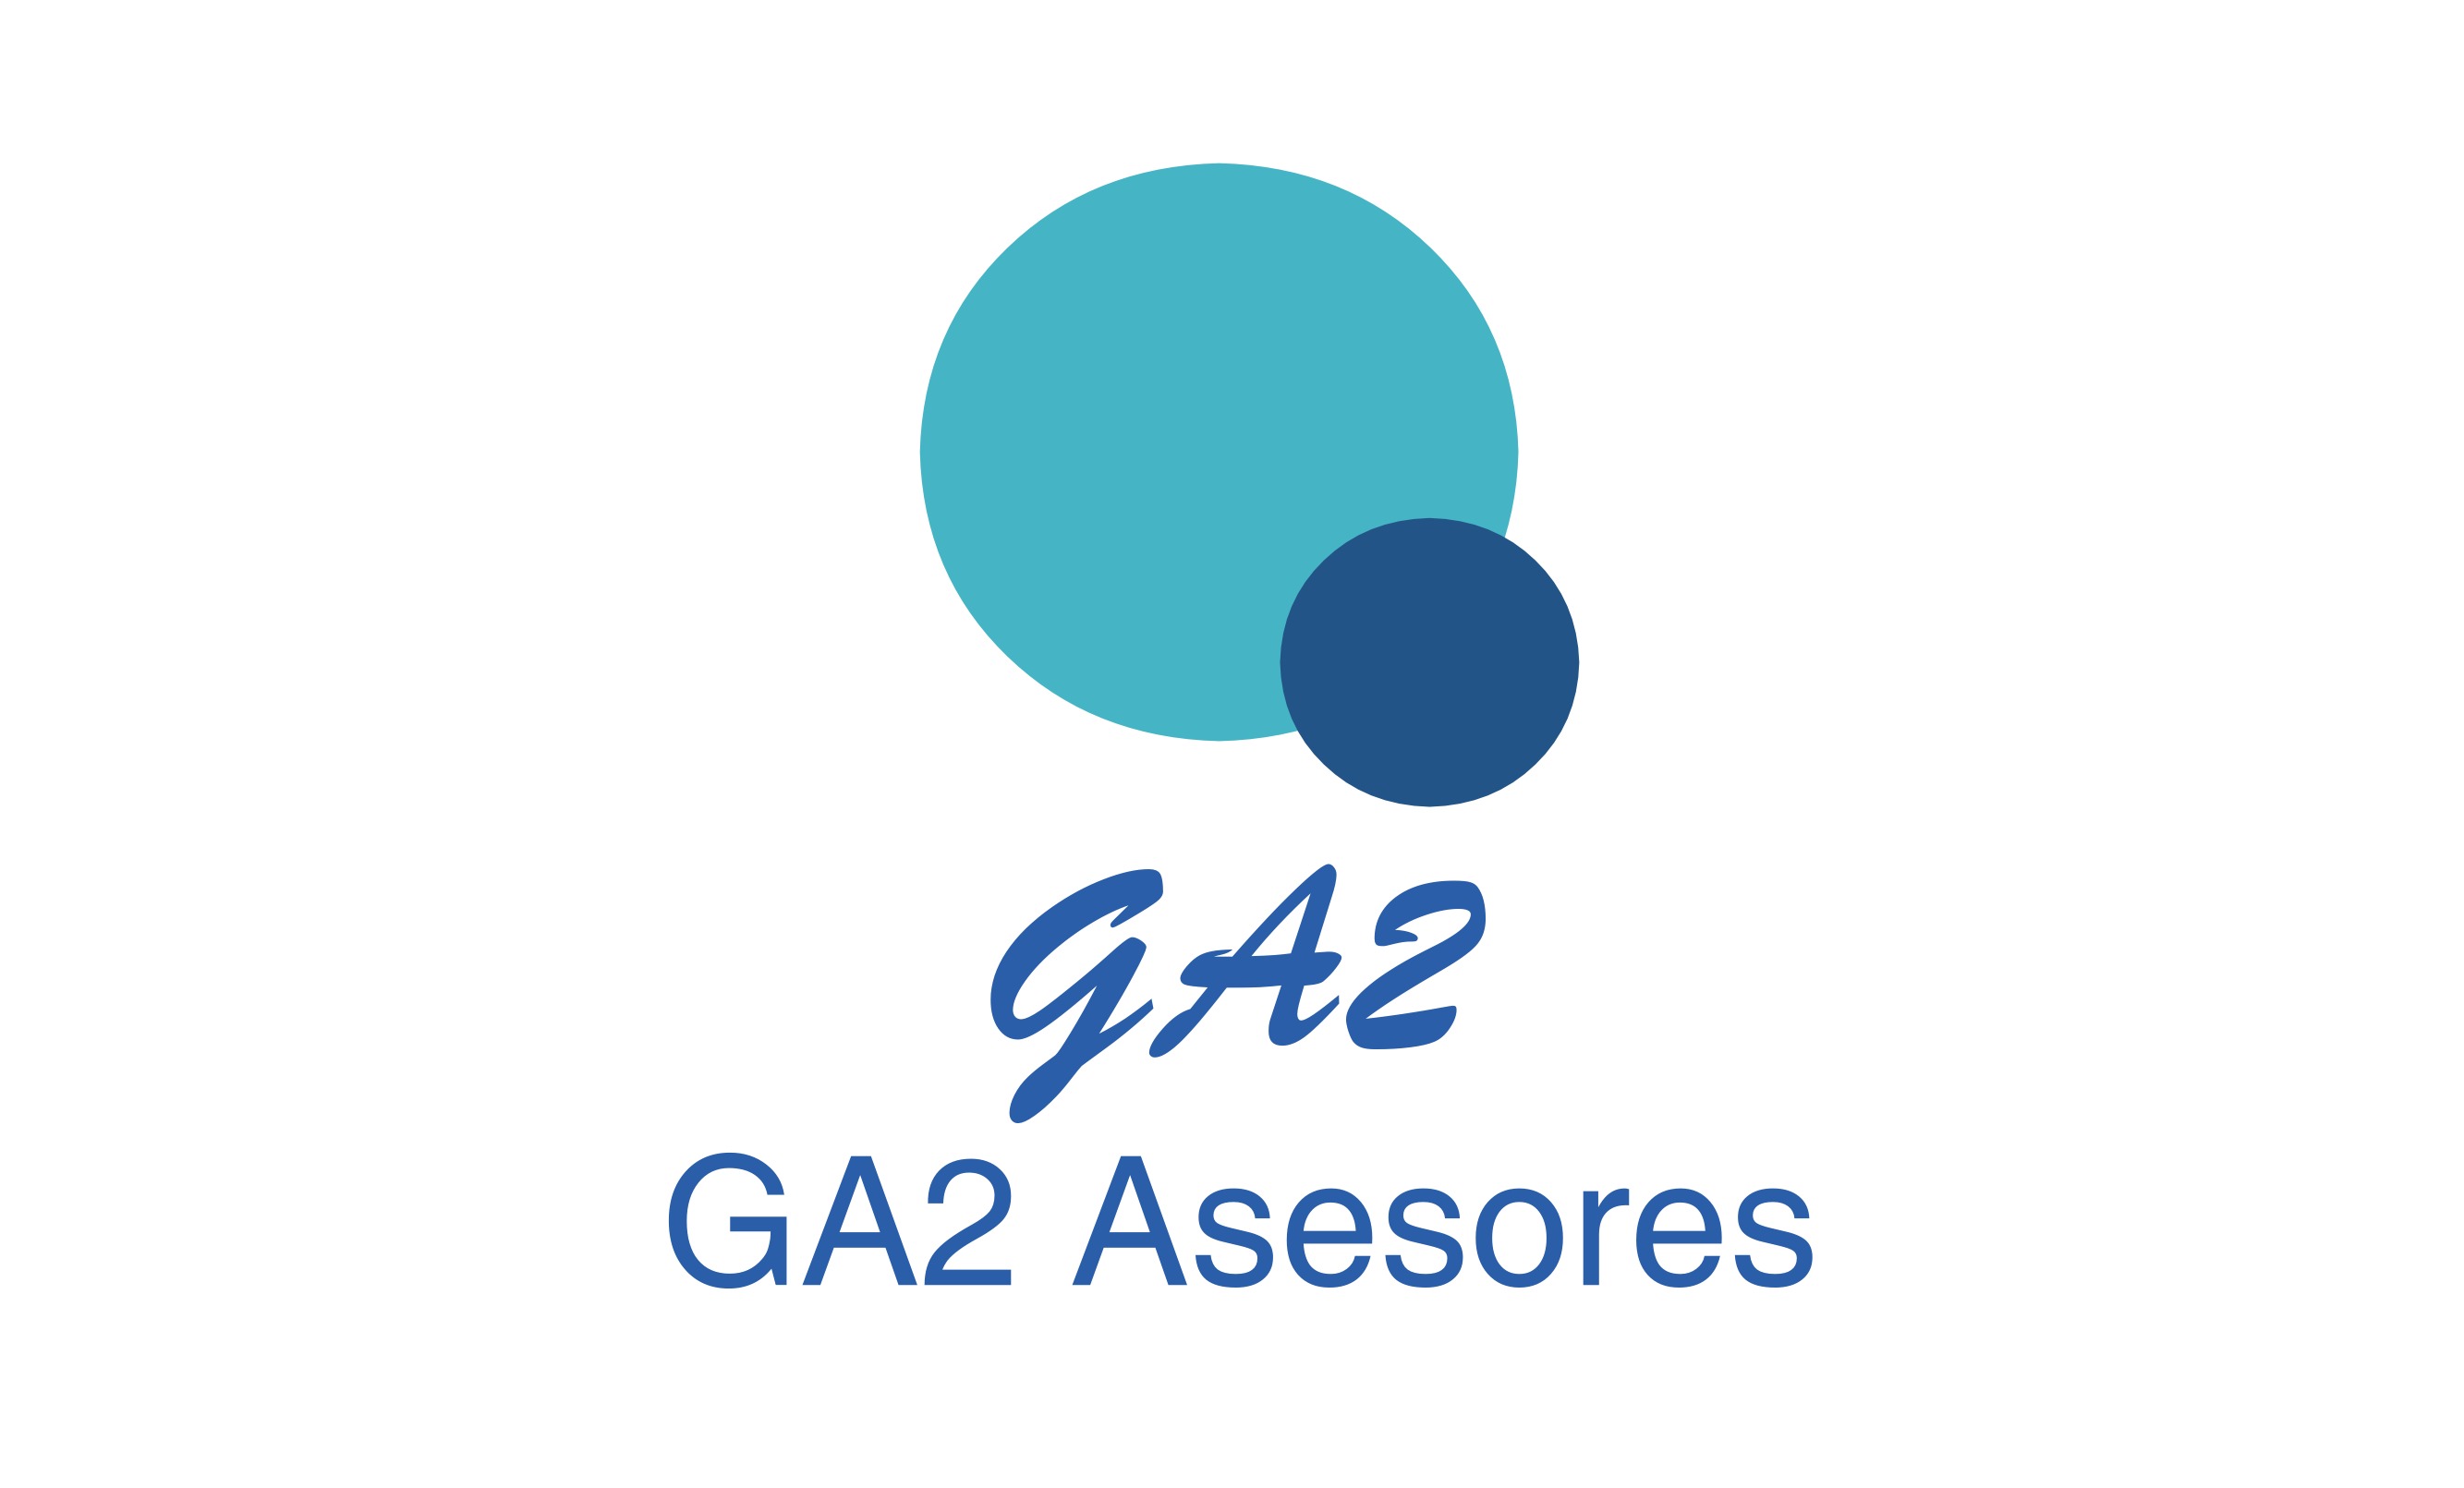 GA2 Asesores Madrid